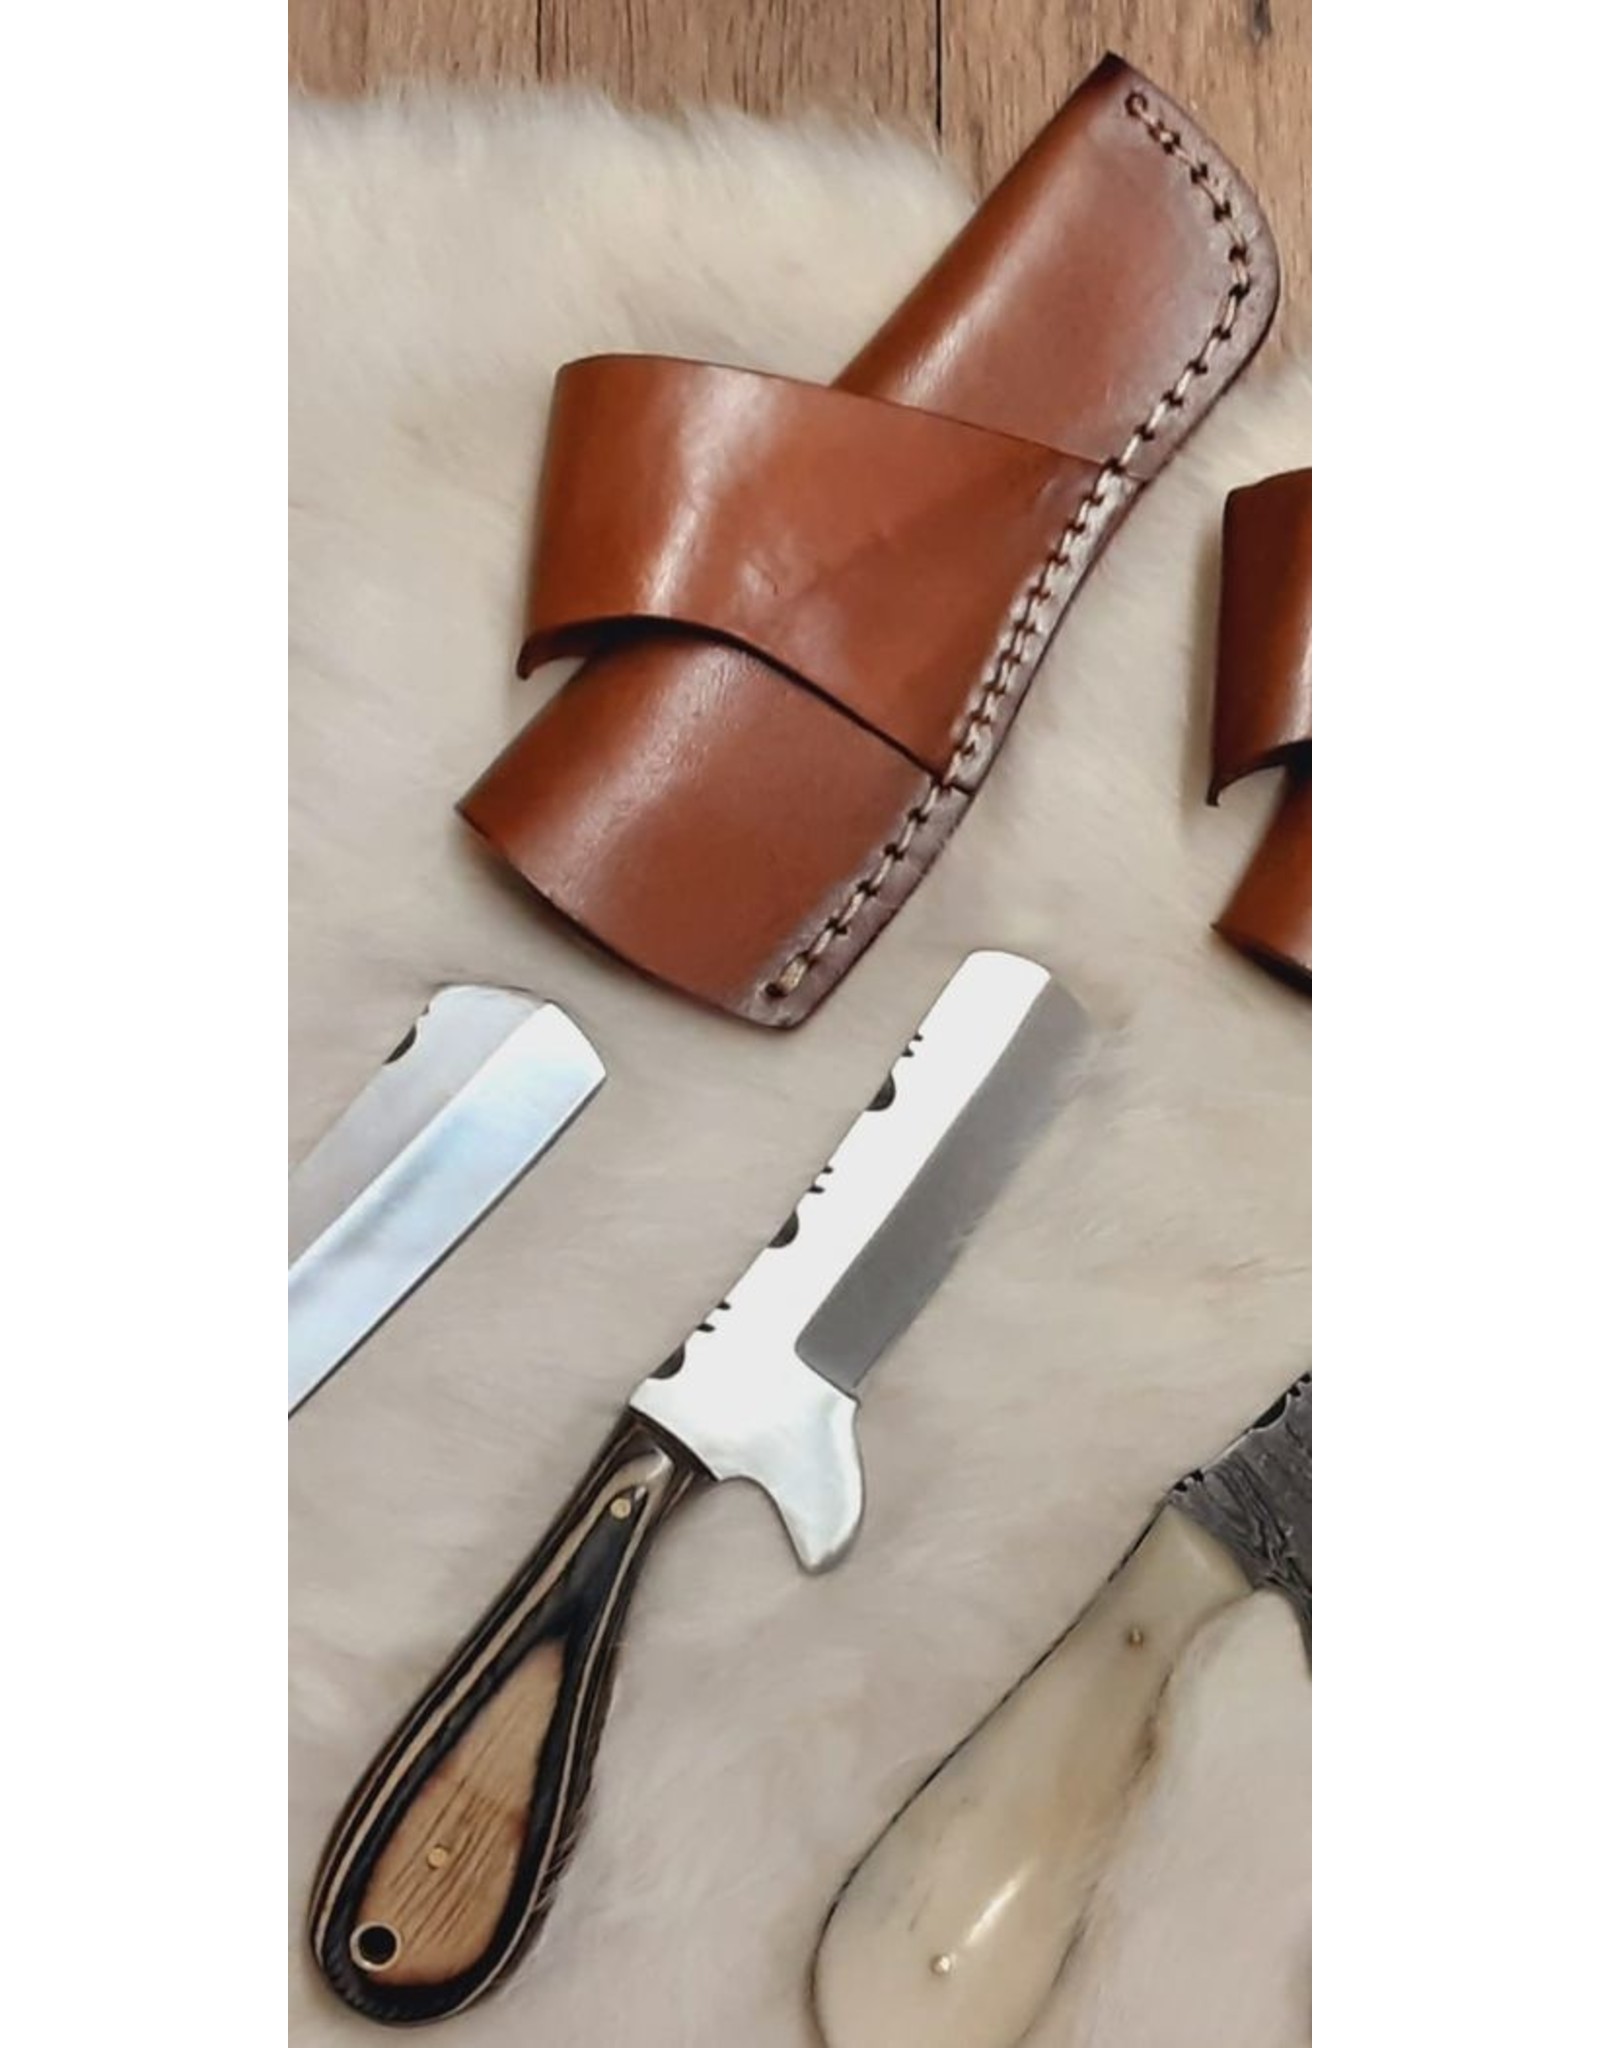 Bull Cutter Knife Surgical Steel Wood Grip w/ Sheath